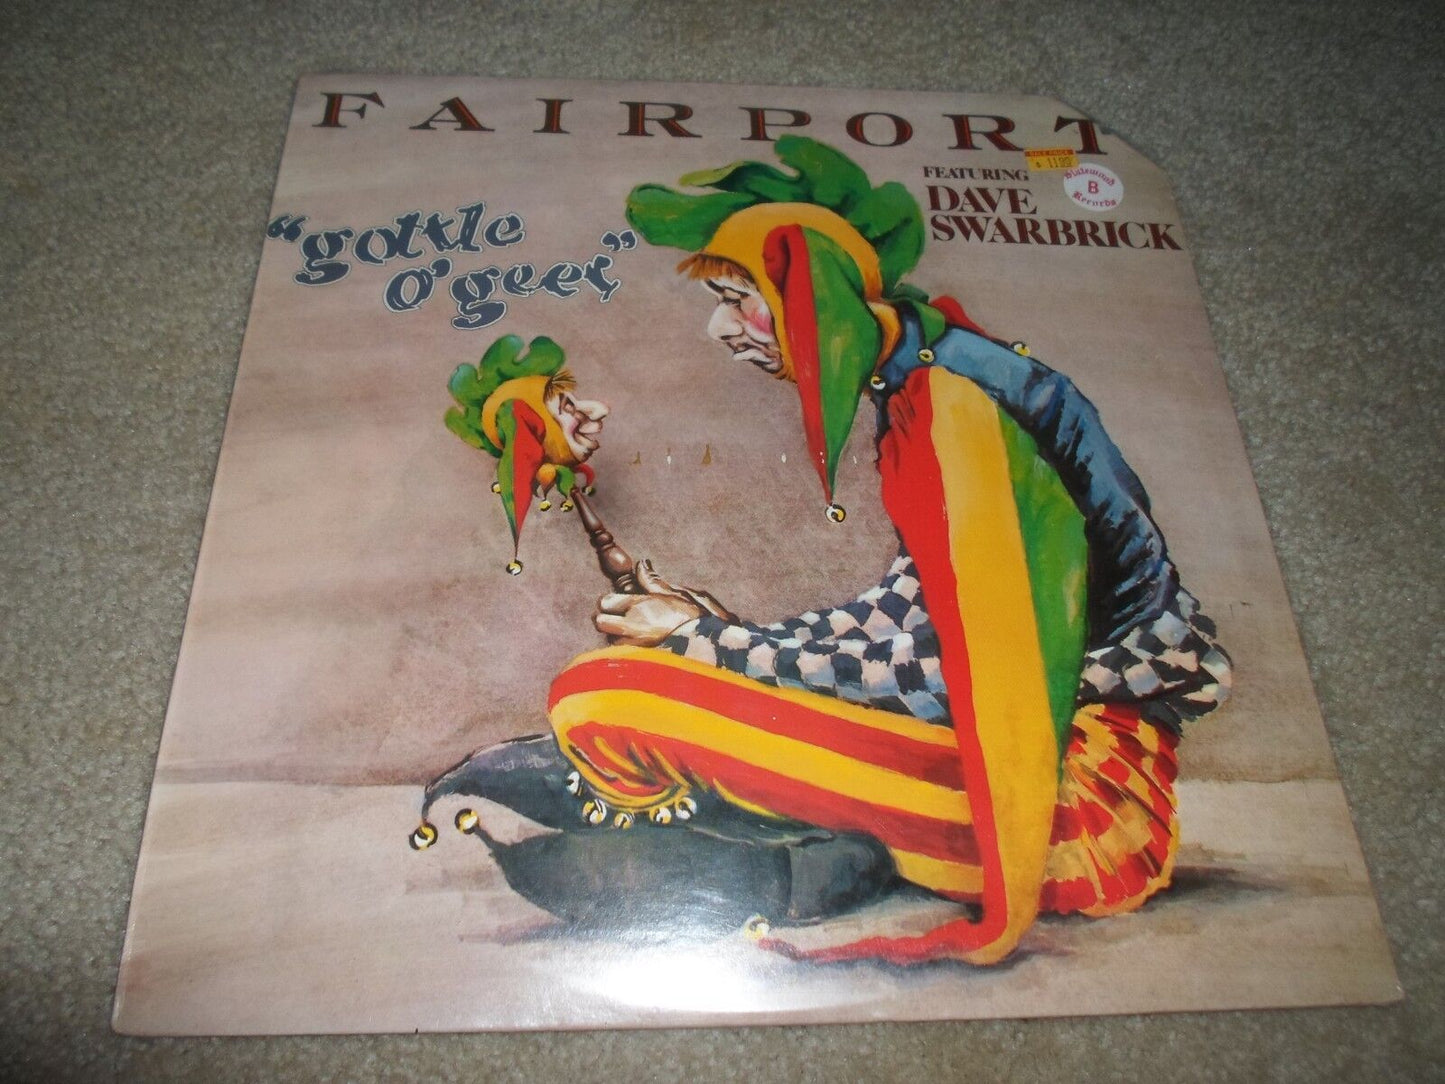 Fairport "Gottle O'geer" (1976) LP : UK Island / Folk-Rock / Sealed Lp